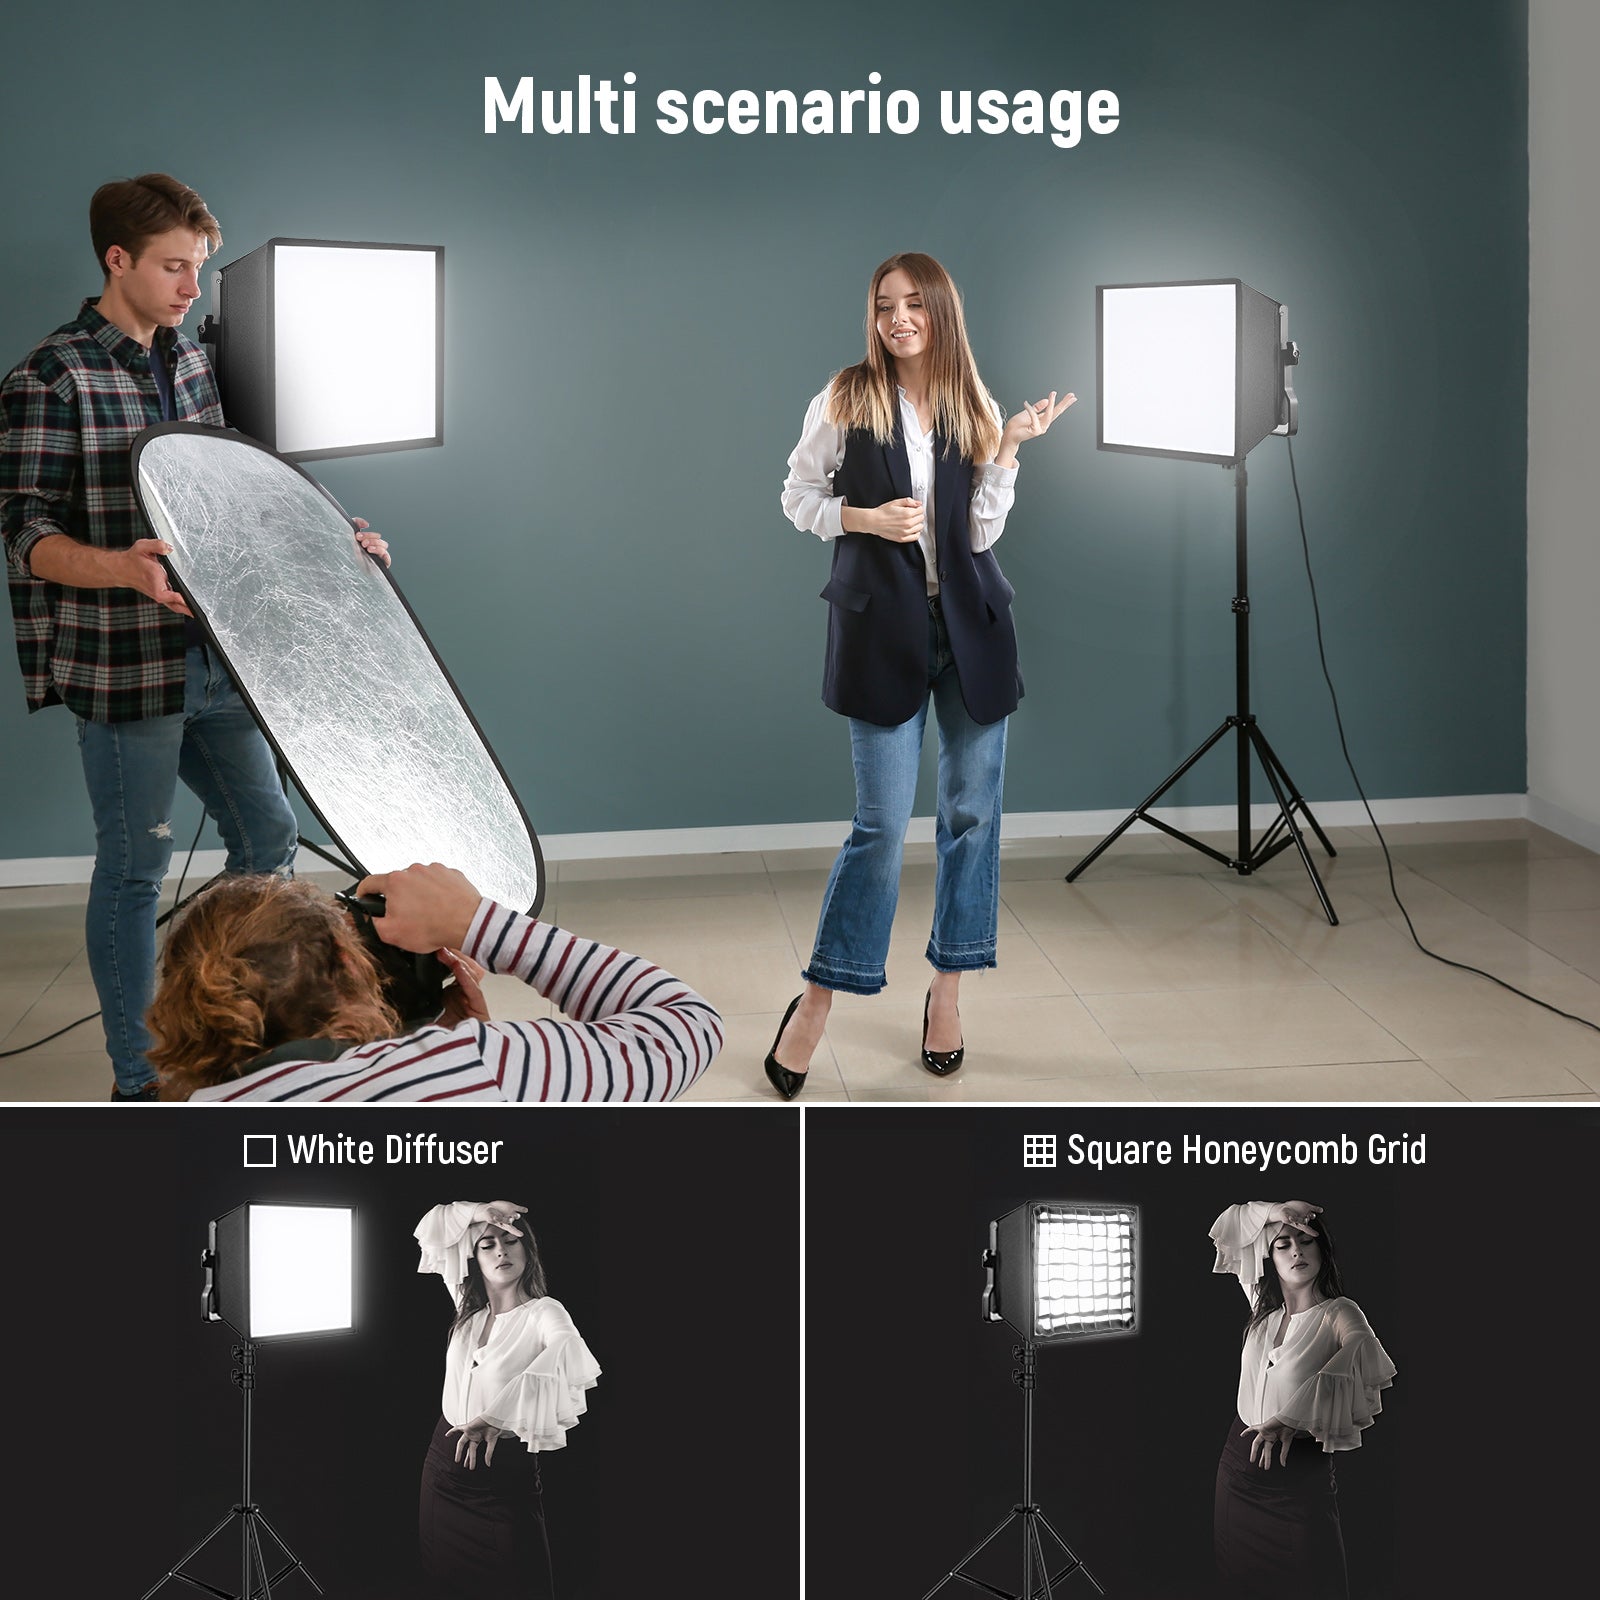 Neewer 530/ 660 Pro Rgb Led Video Light With App Control Softbox  Kit,360°full Color,50w Video Lighting Cri 97 - Photographic Lighting -  AliExpress